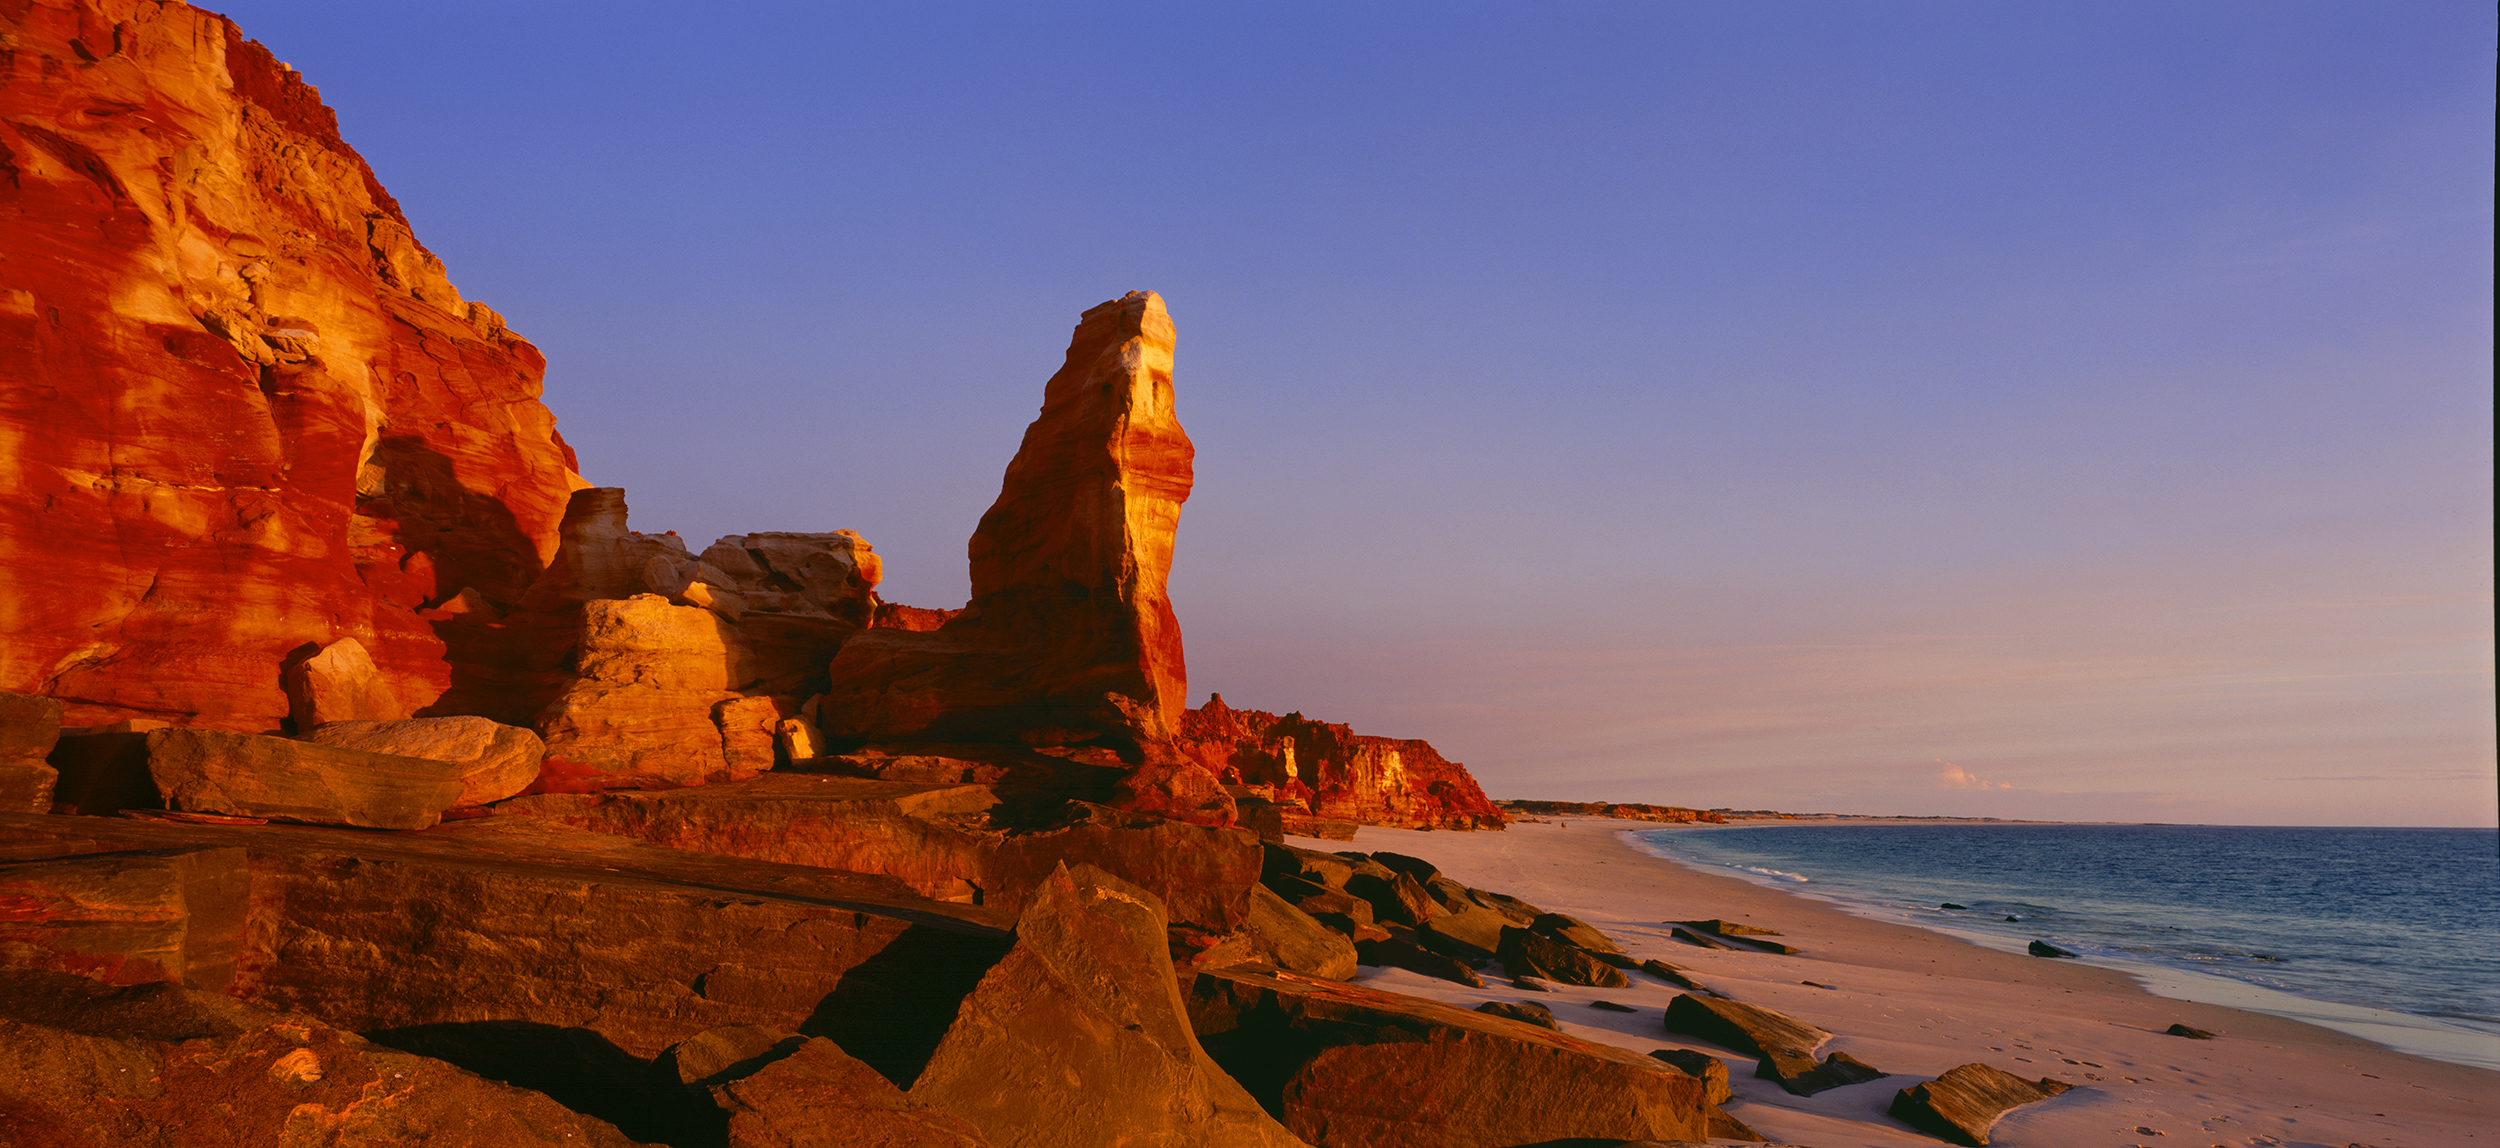  Western Beach, Cape Leveque, Kimberley, Western Australia, 2008.&nbsp; Edition of 3. 